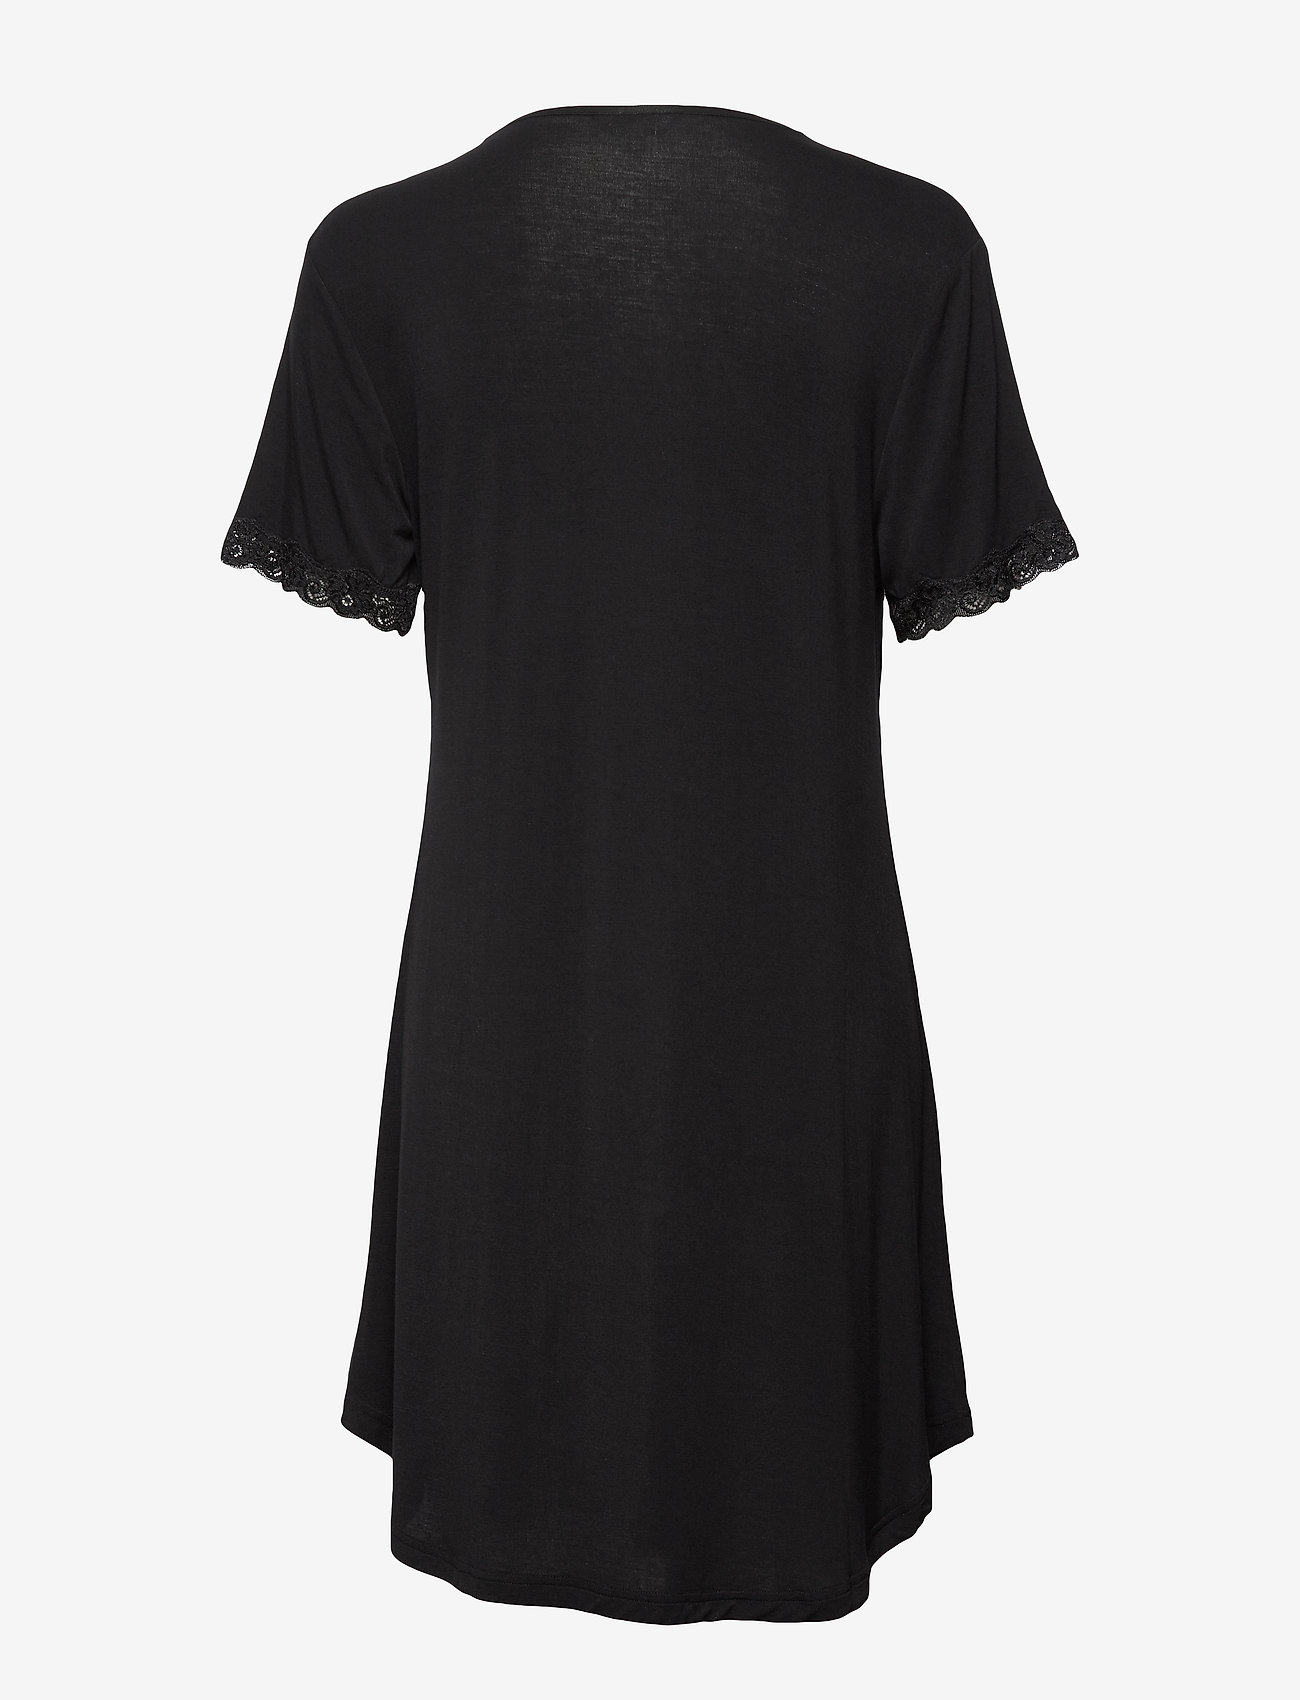 Lady Avenue - Bamboo short sleeve nightdress with - plus size - black - 1